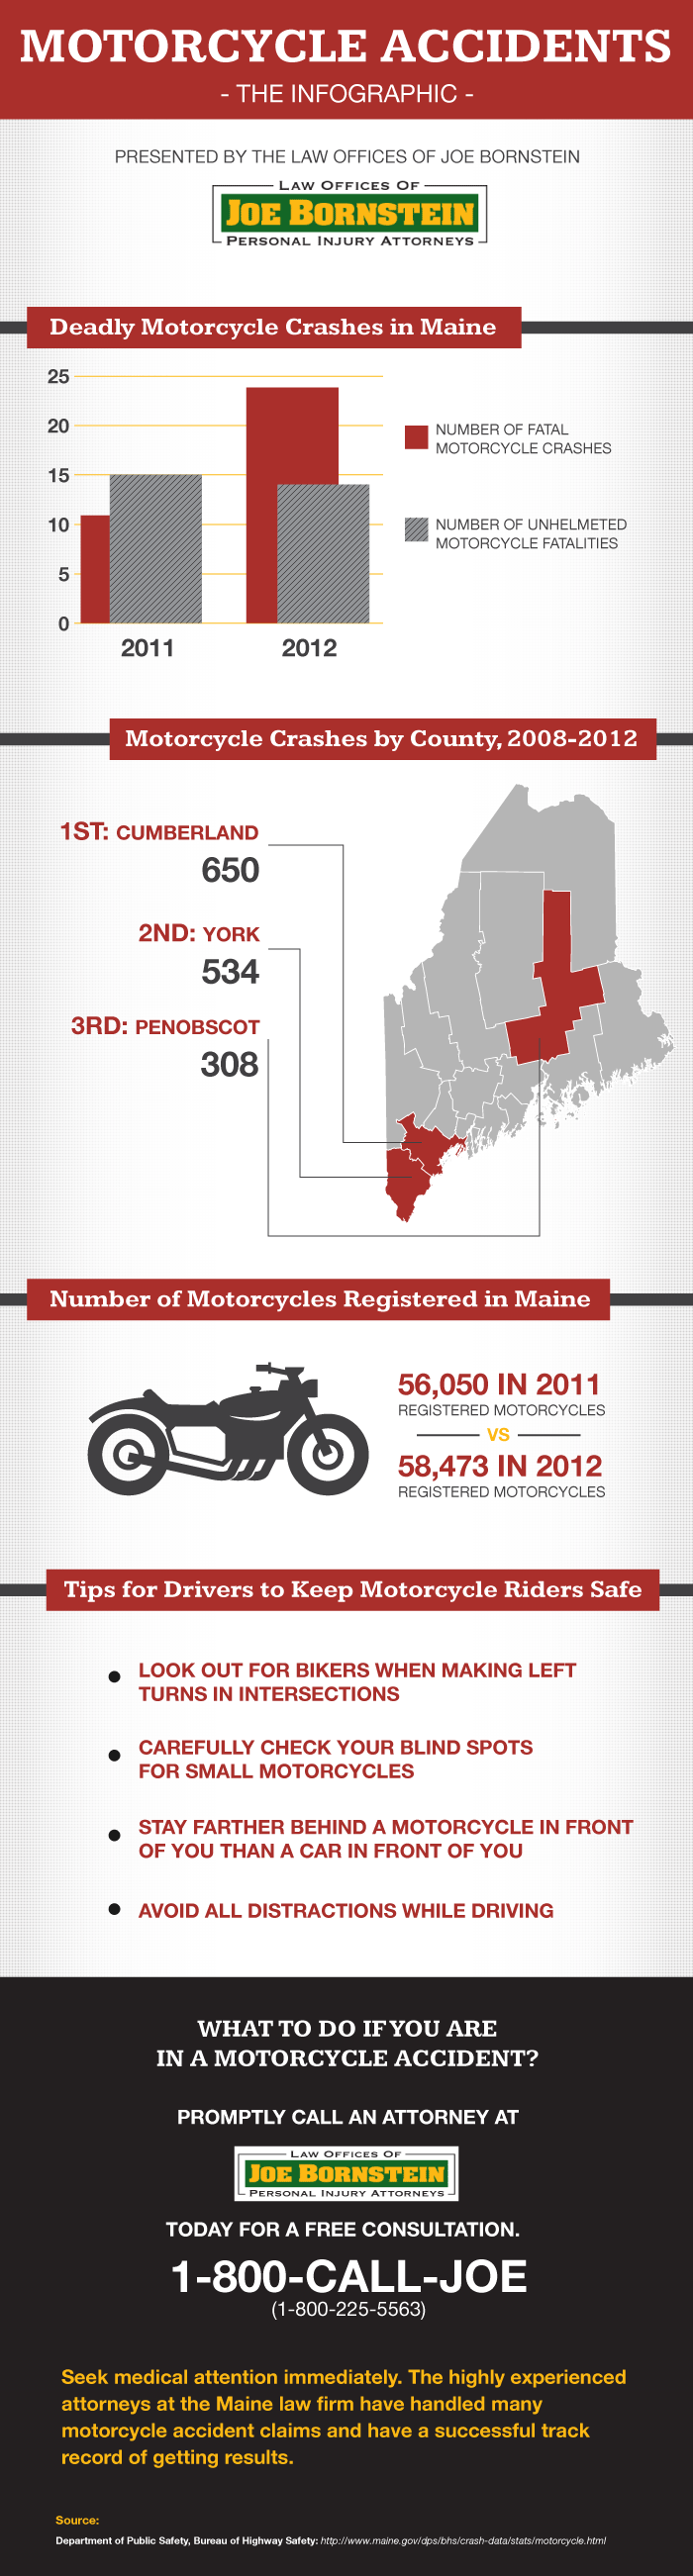 Bornstein Motorcycle Accidents infographic